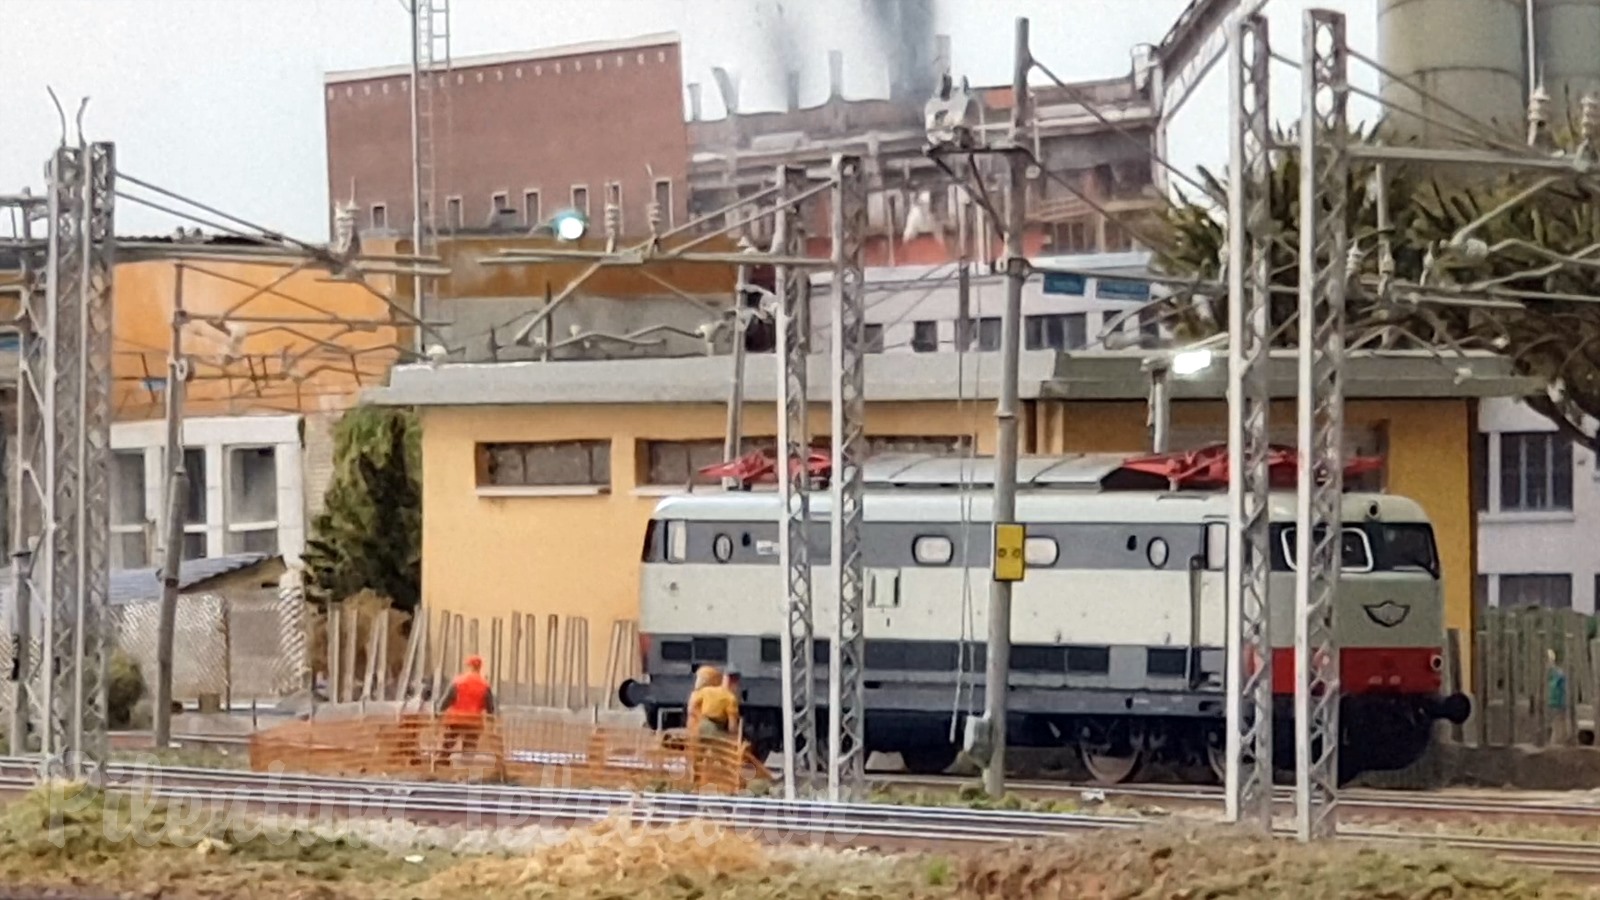 Treni in Transito: Modular Model Railway from Italy (Gruppo Fermodellistico Tartaruga)